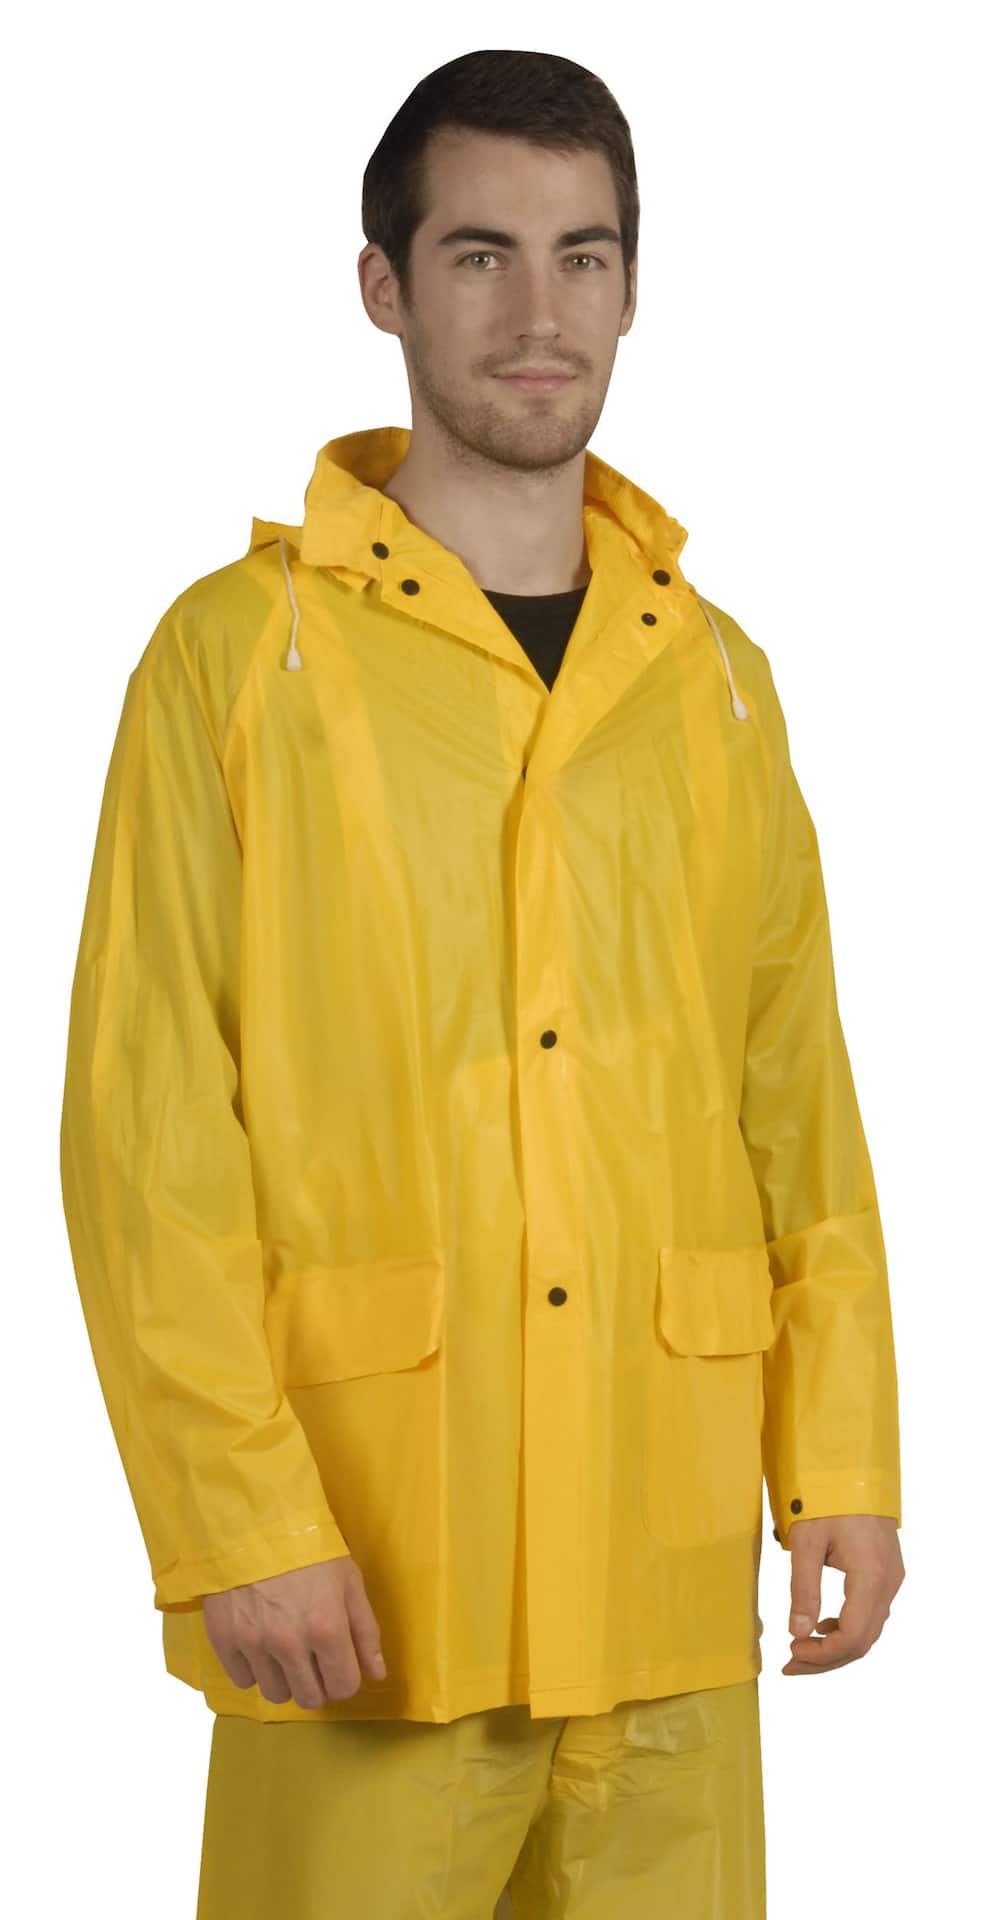 https://media-www.canadiantire.ca/product/playing/footwear-apparel/summer-footwear-apparel/0782757/pvc-rain-jacket-yellow-size-xlarge-1ff9733b-63e7-463f-aa4c-c134f75963ac-jpgrendition.jpg